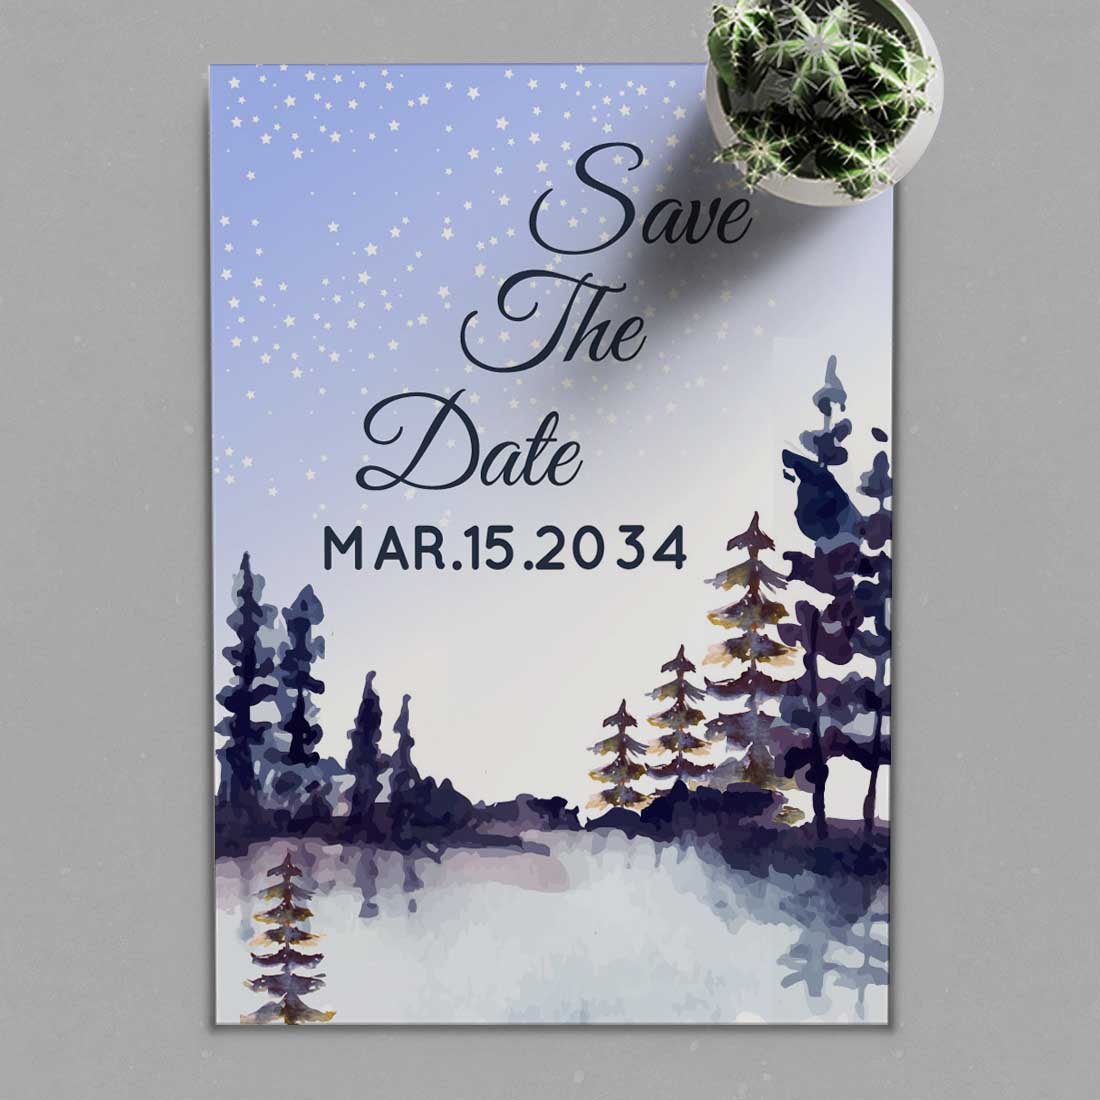 Landscape Tree with Winter Wedding Card presentation.